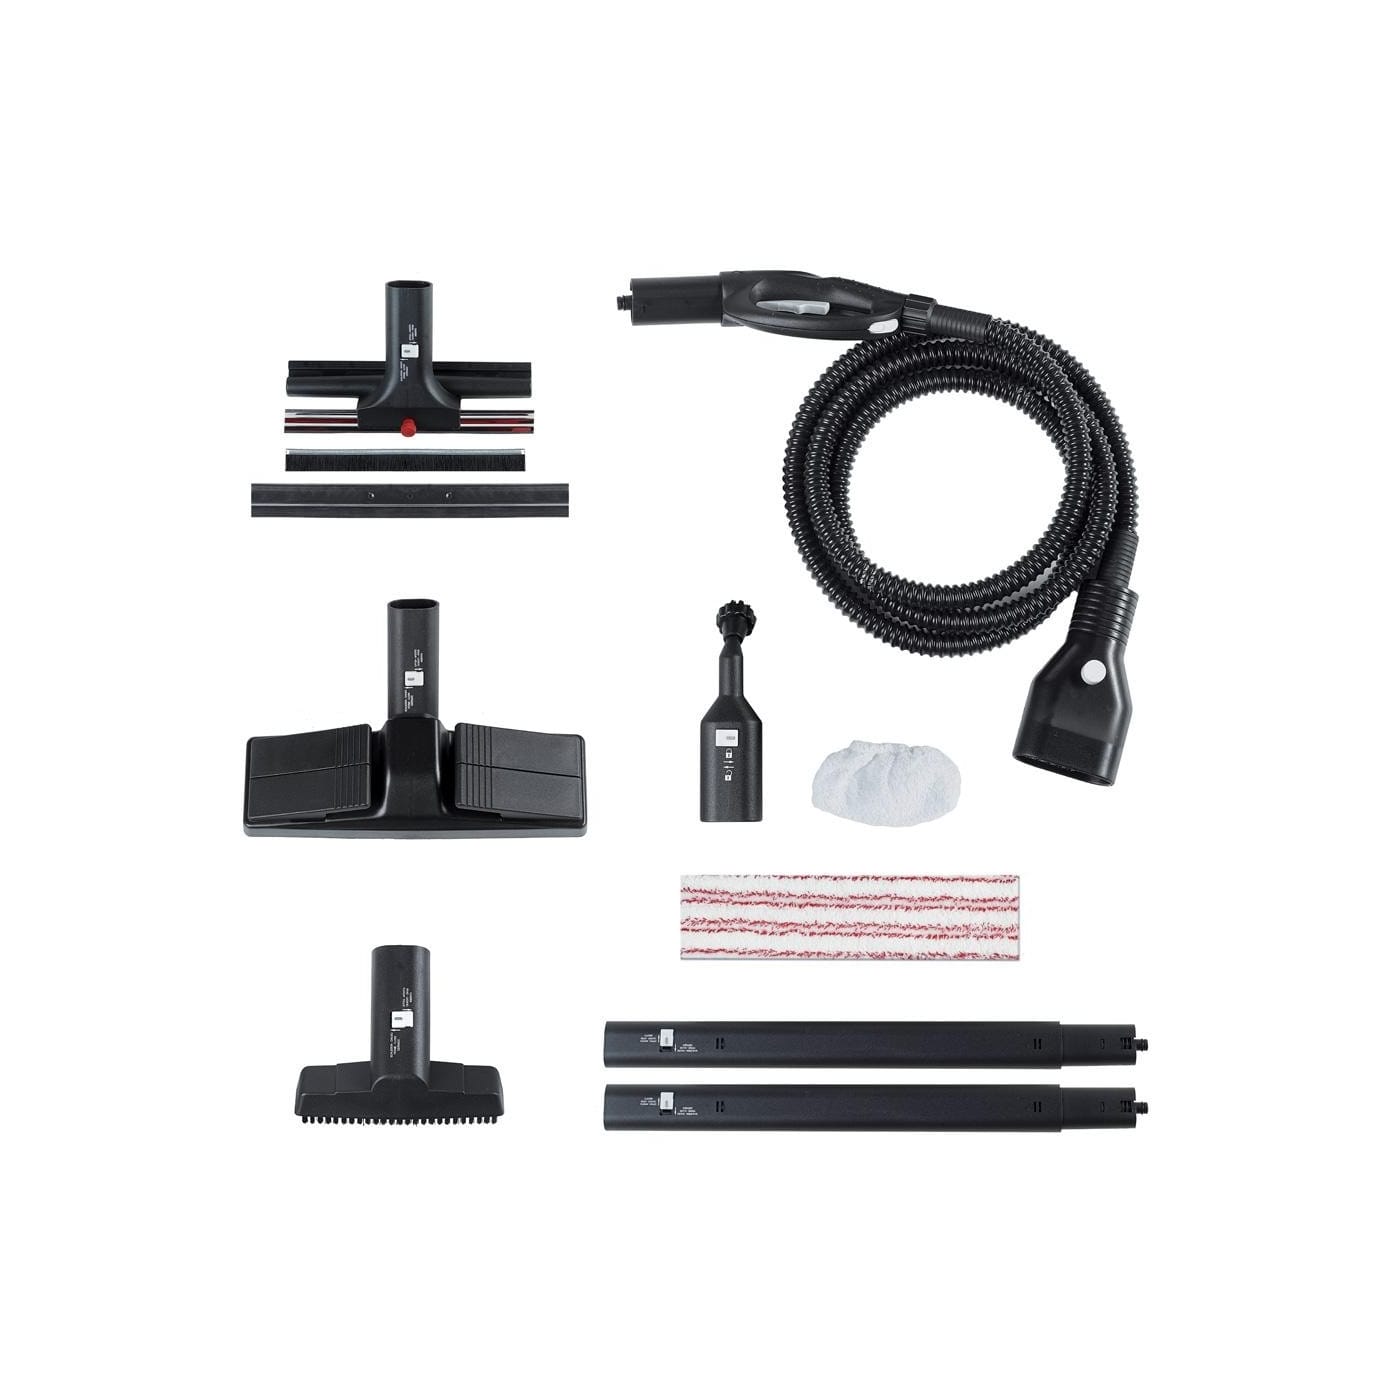 Cimex Eradicator Steam Accessories Kit